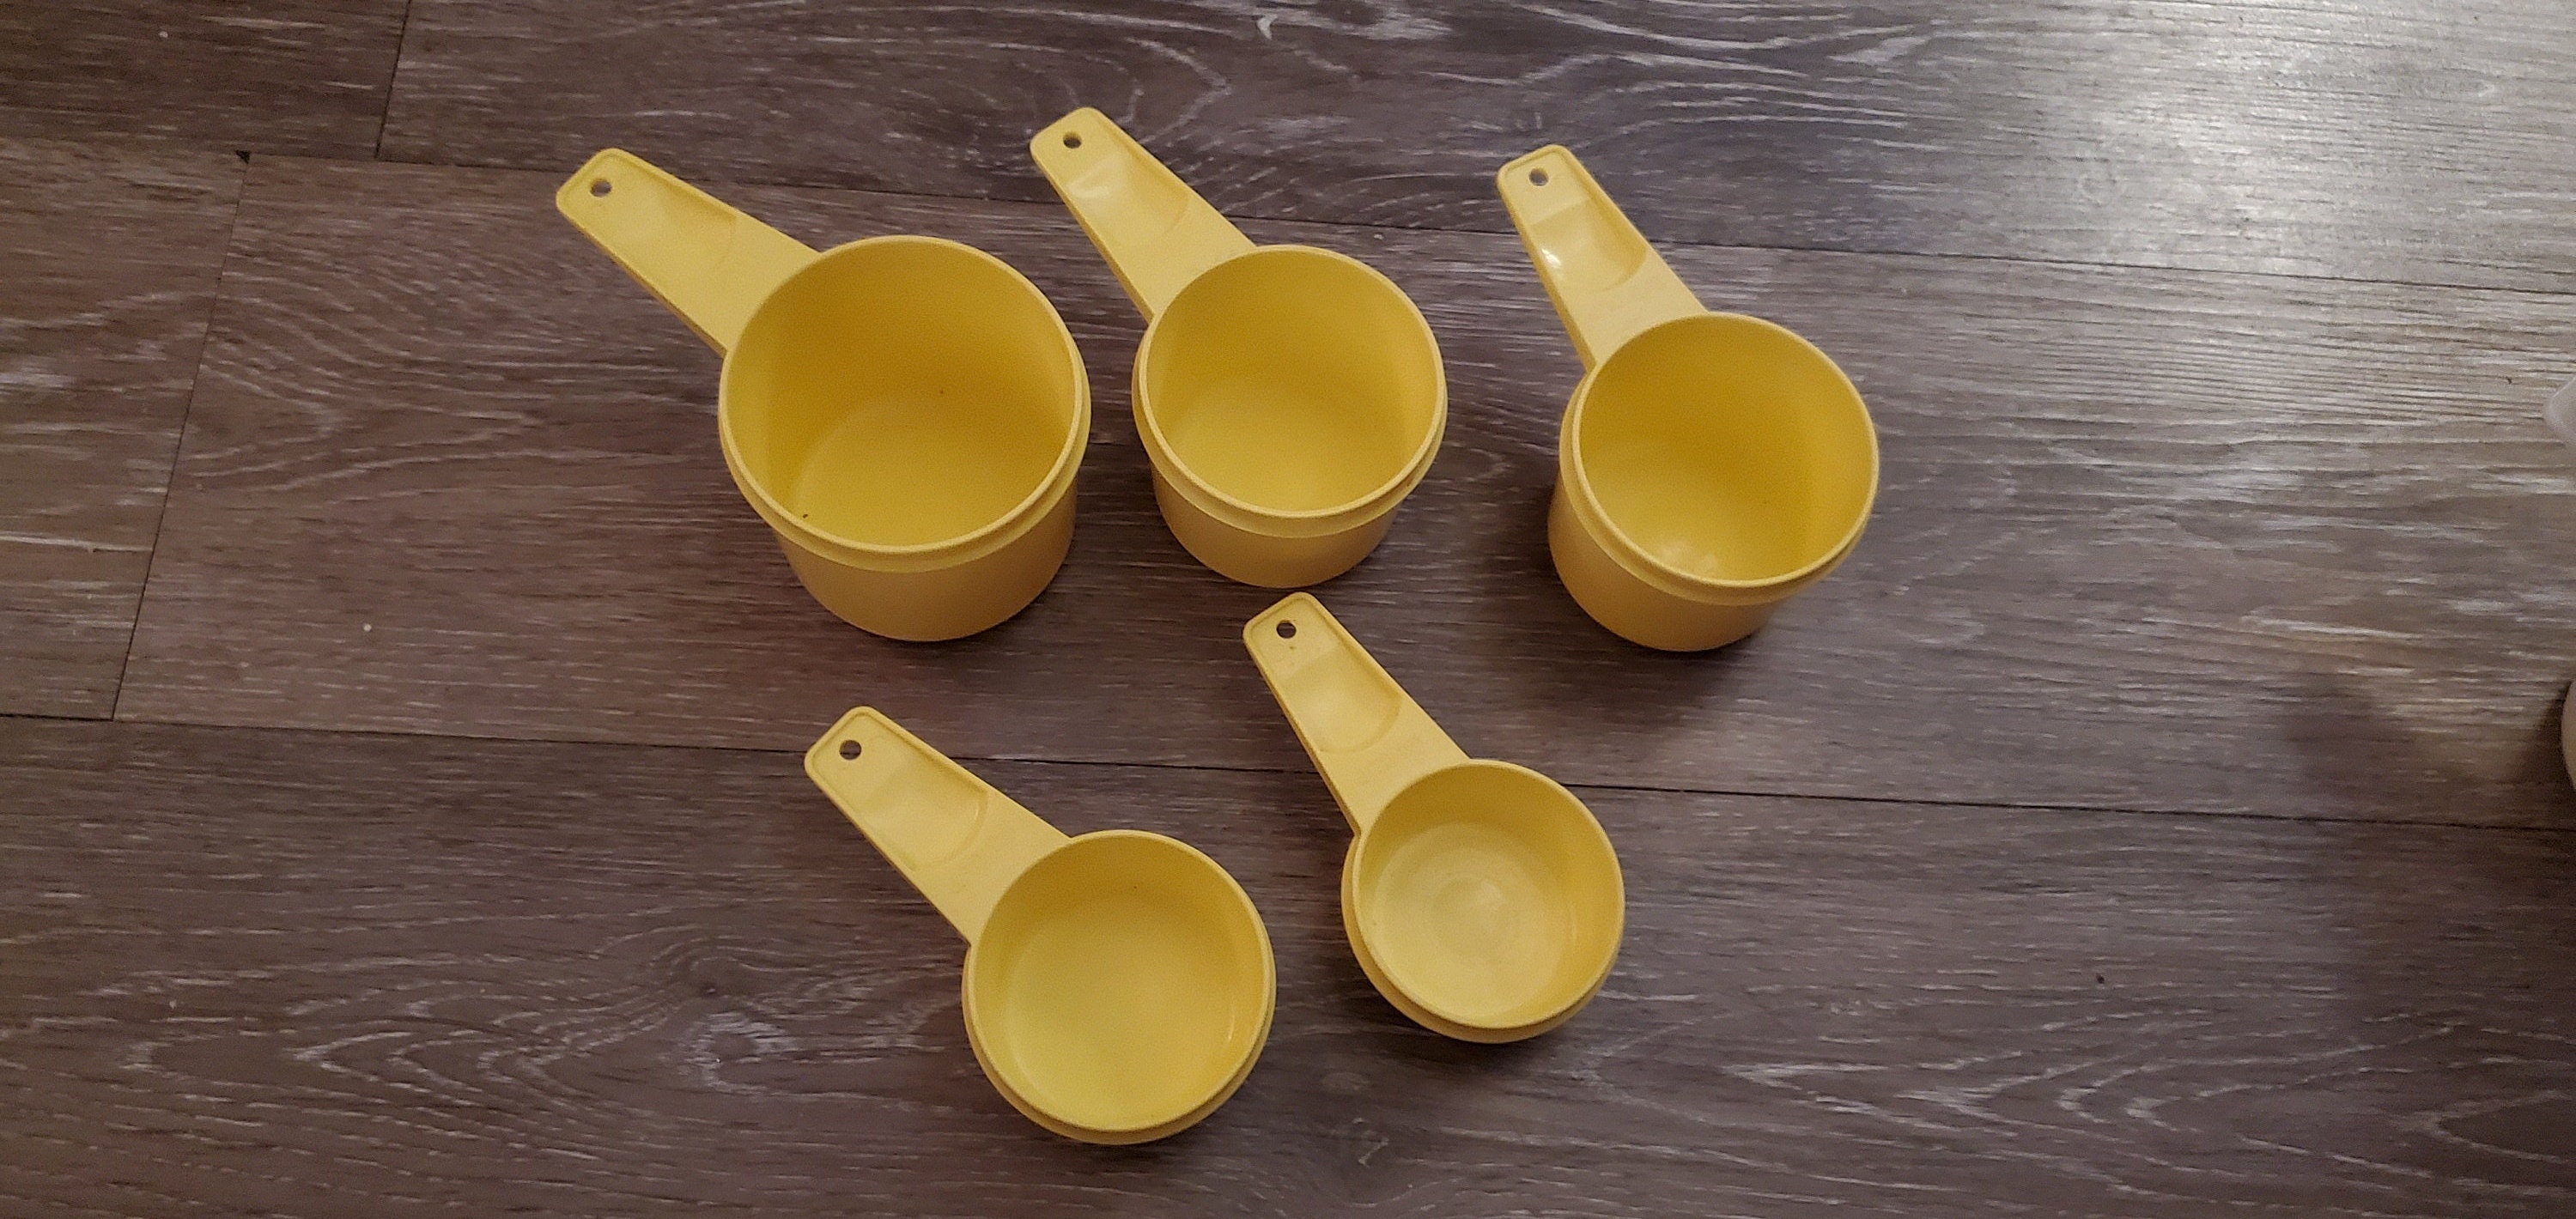 Tupperware Measuring Cups & Spoons Set Nesting Scoops PURPLE Rare Baking  Tools